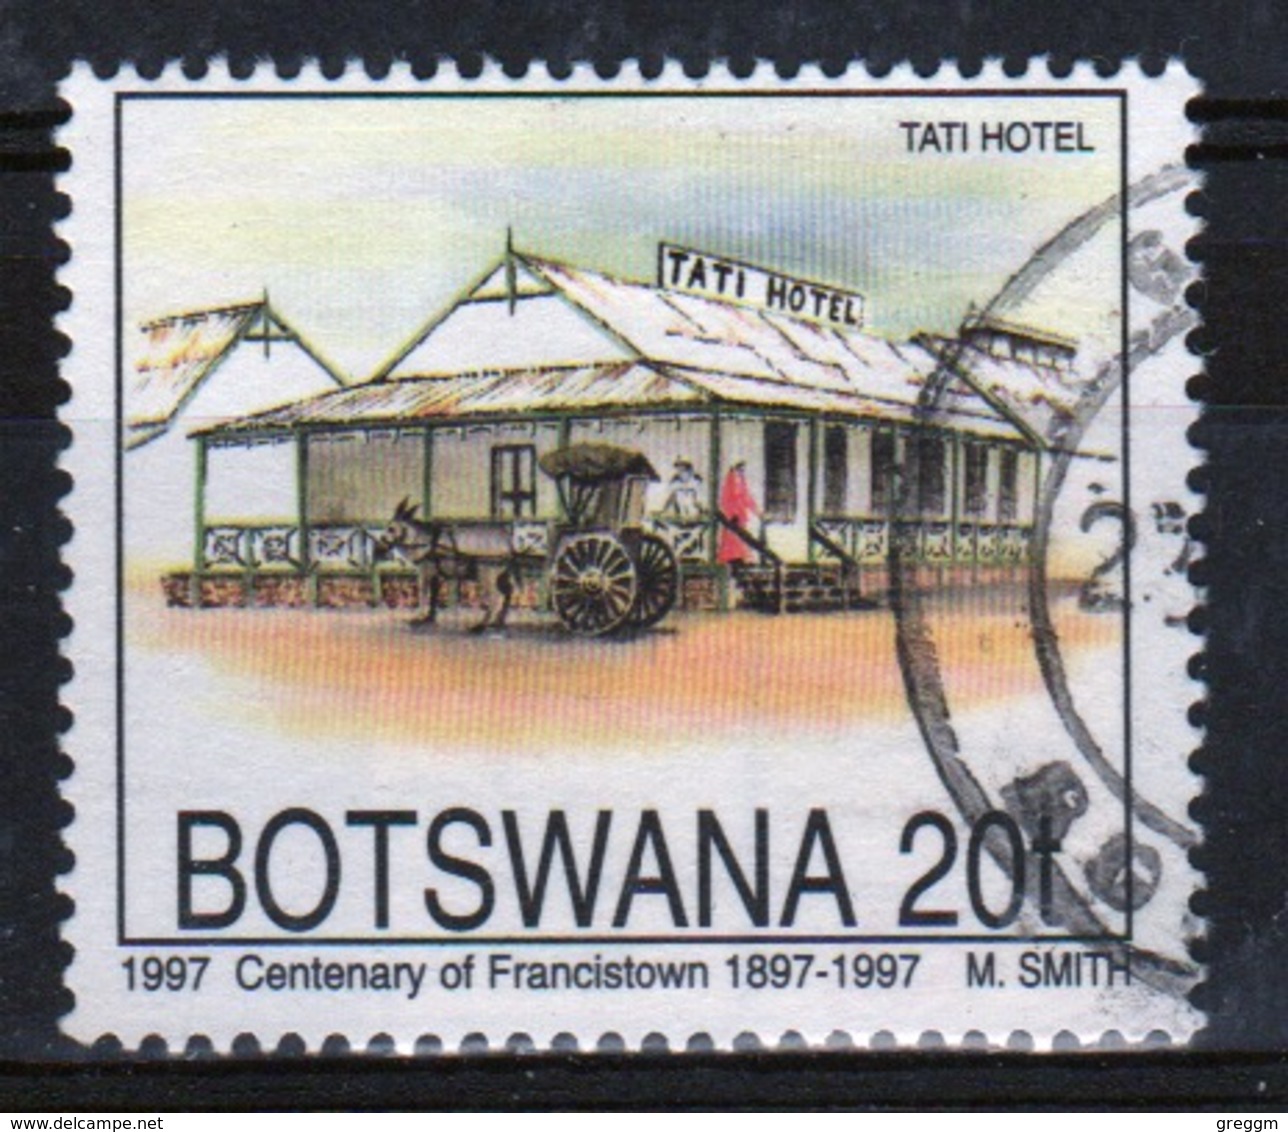 Botswana 1997 Single 20t Commemorative Stamp From The Francistown Centenary Set. - Botswana (1966-...)